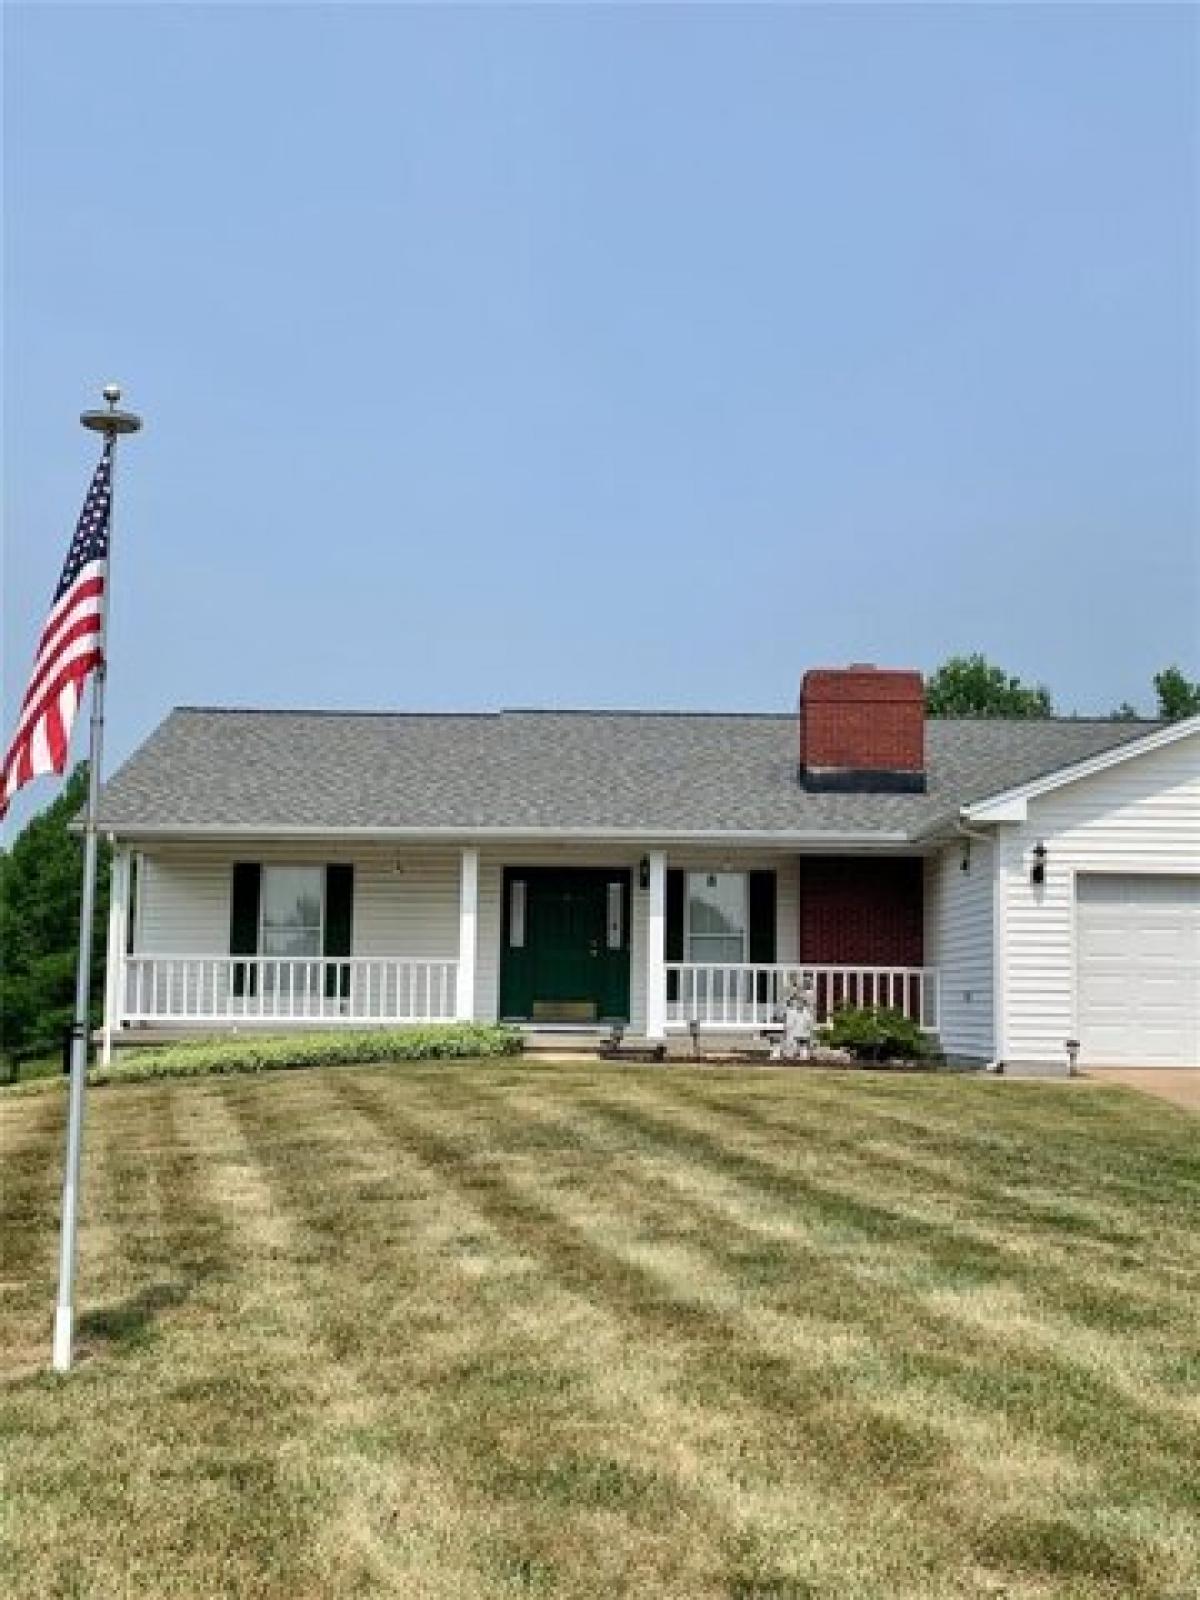 Picture of Home For Sale in Farmington, Missouri, United States